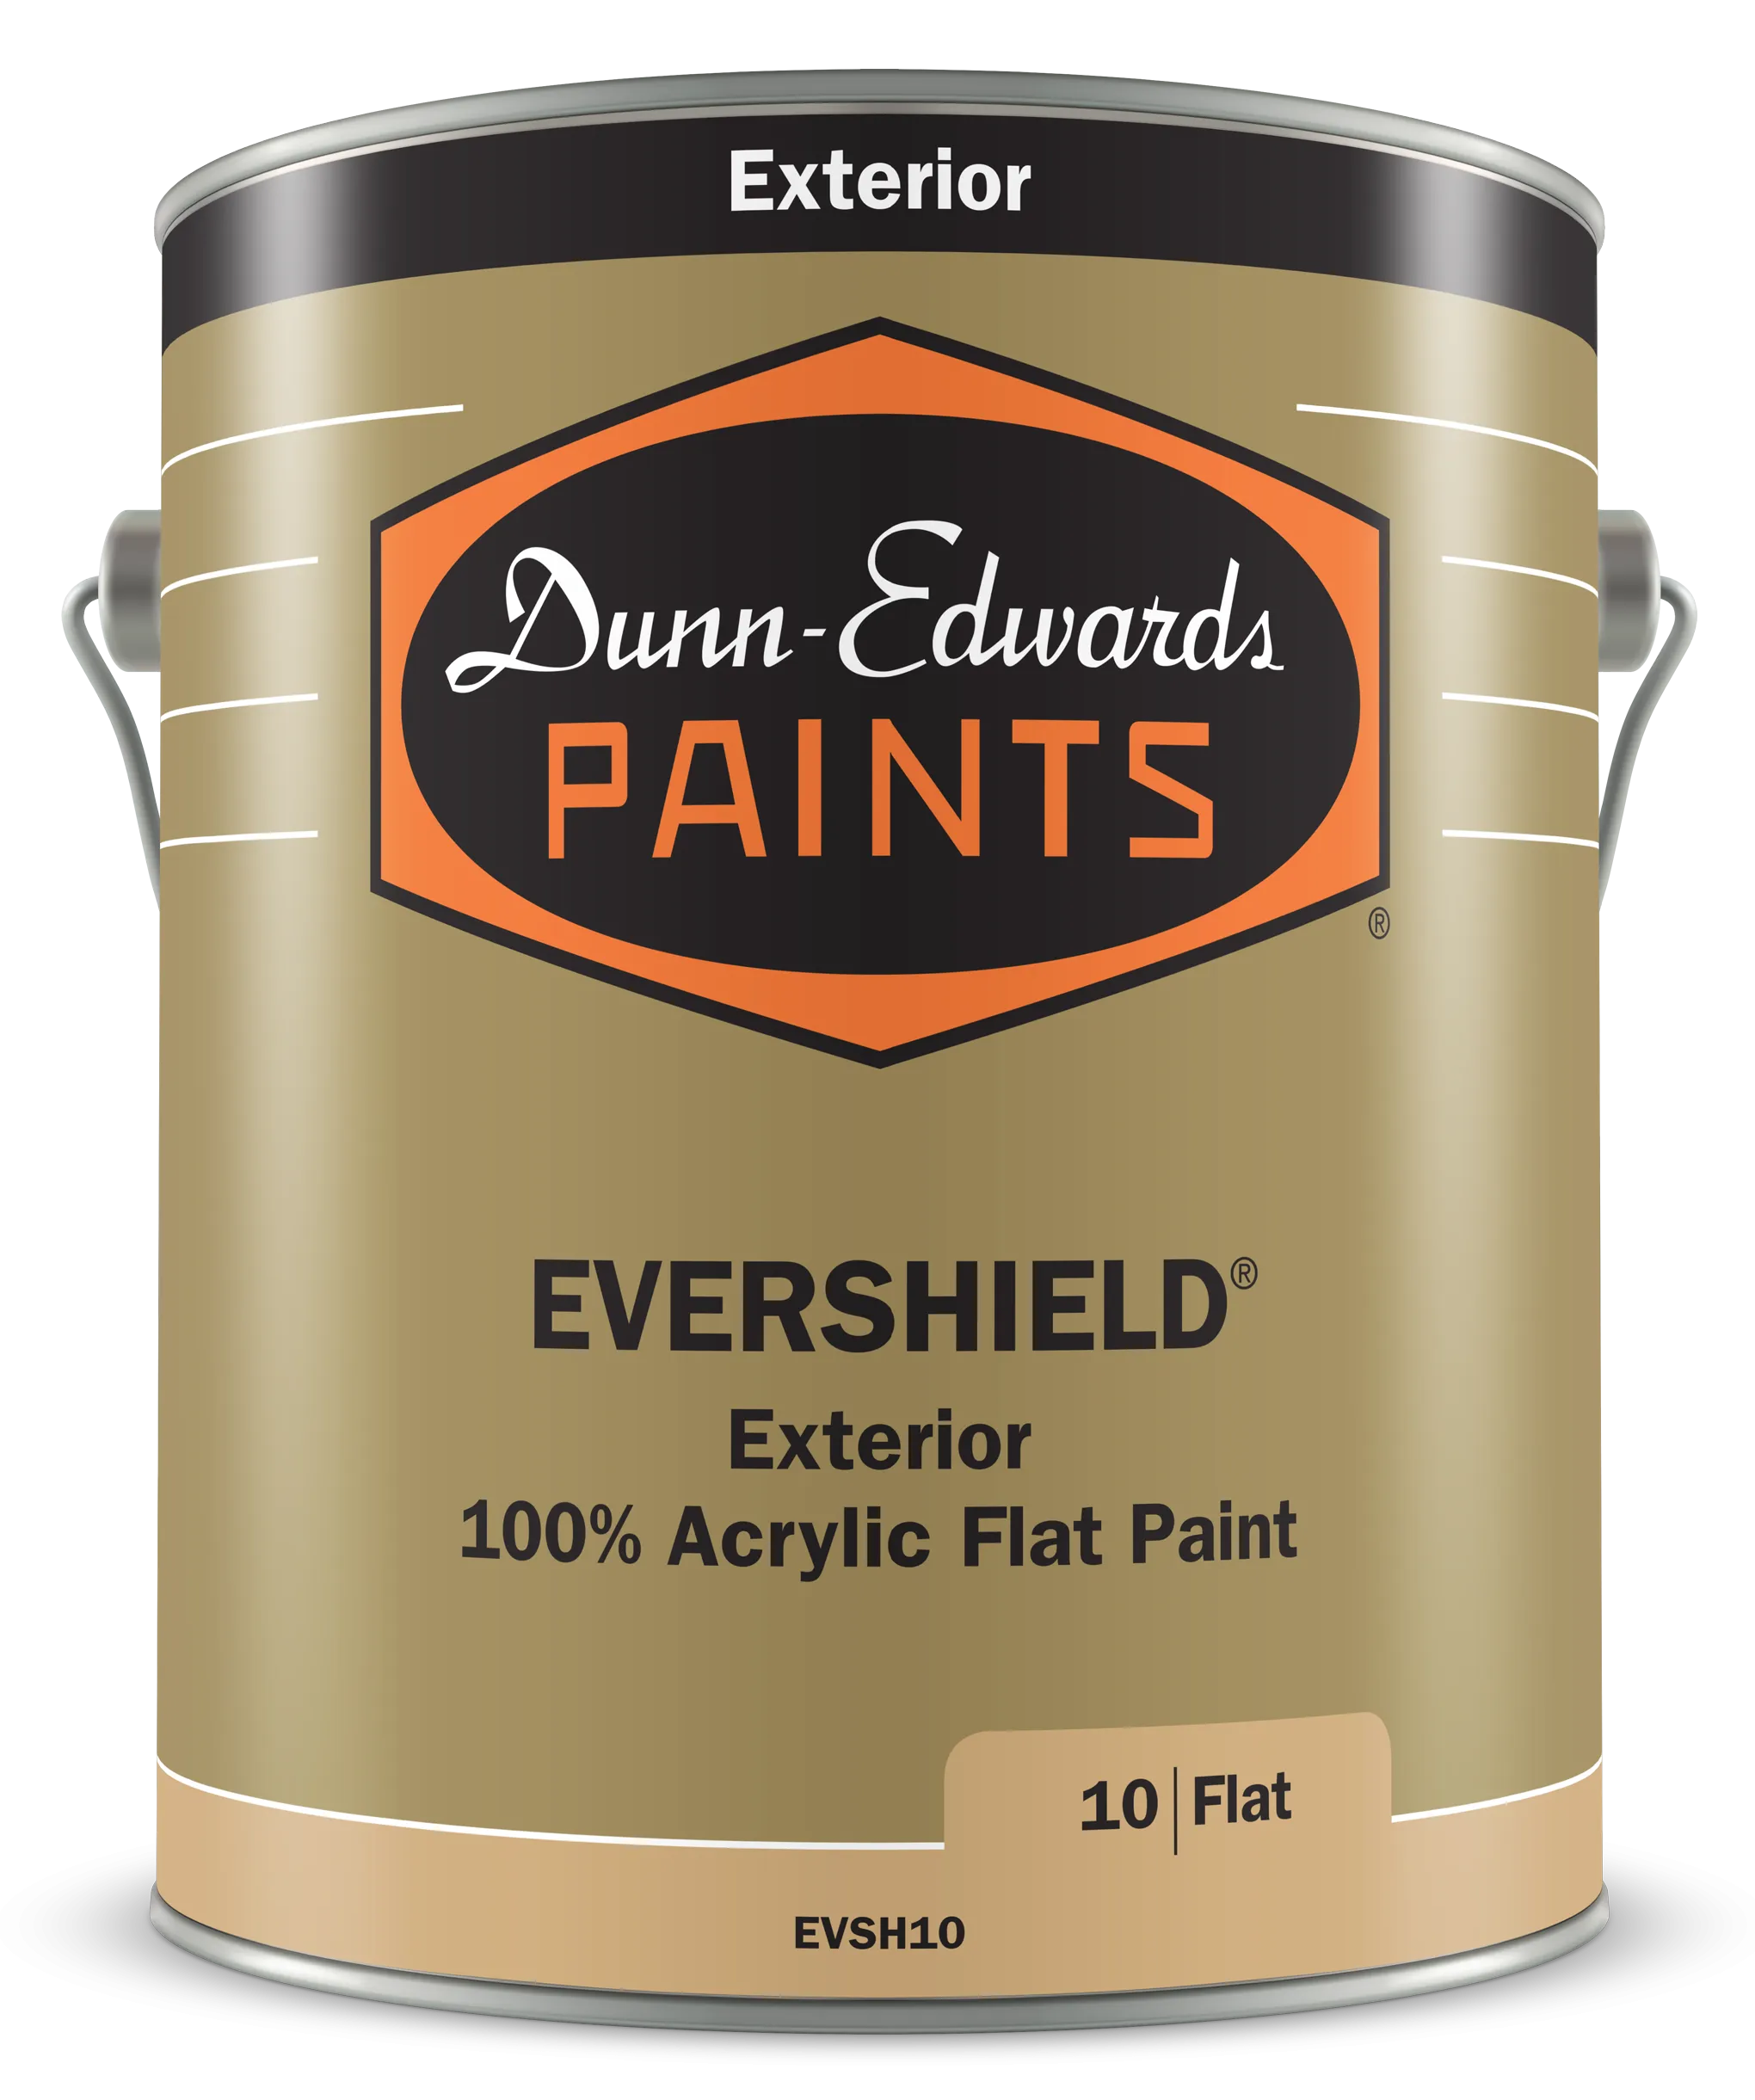 EVERSHIELD Exterior 100% Acrylic Flat Paint Can